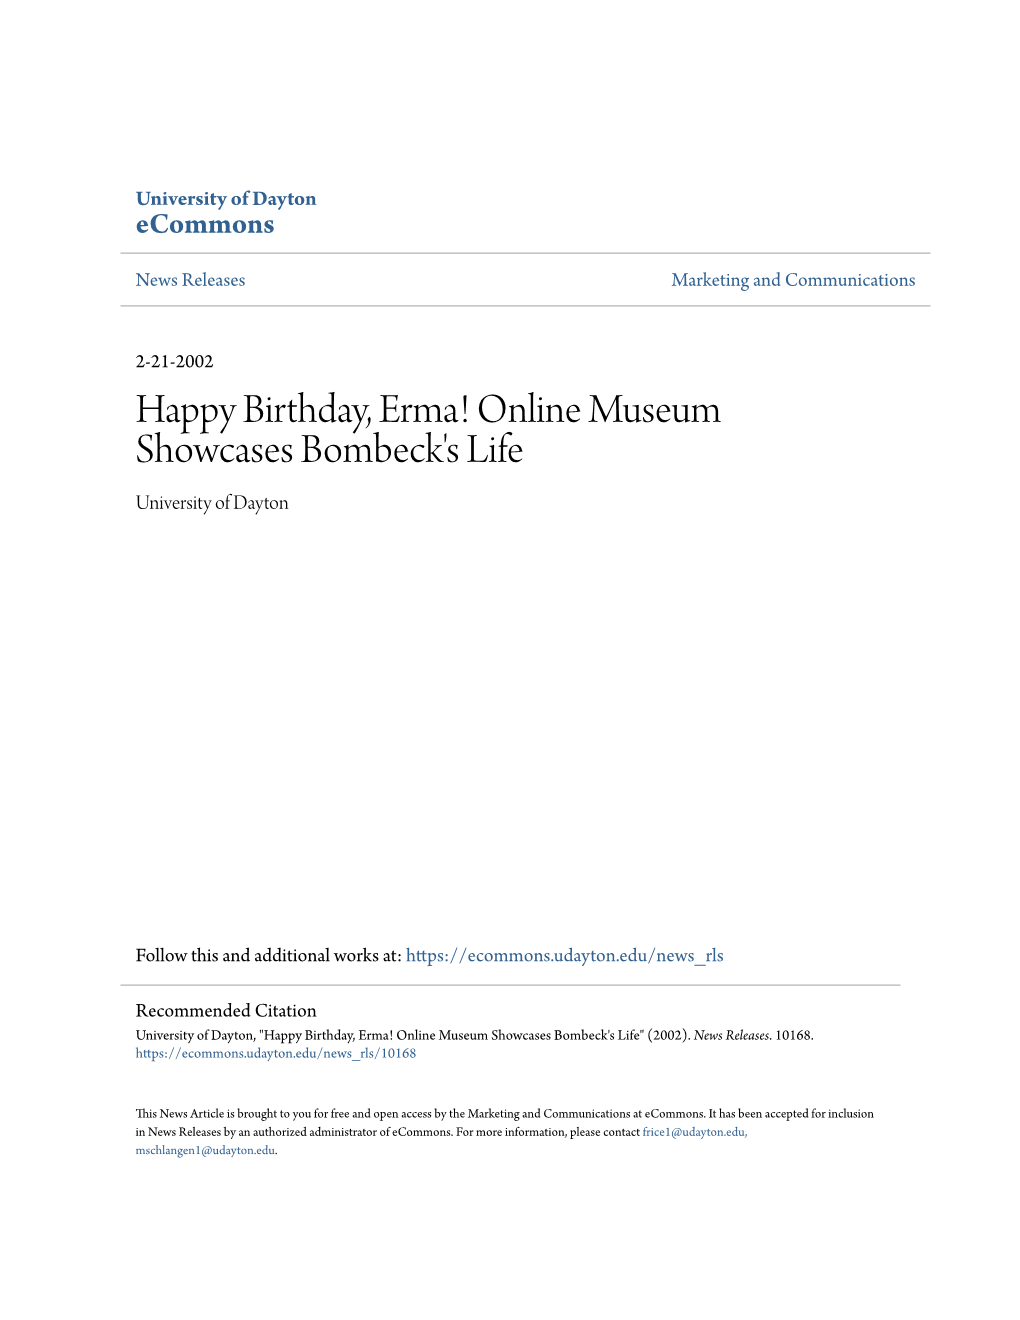 Happy Birthday, Erma! Online Museum Showcases Bombeck's Life University of Dayton